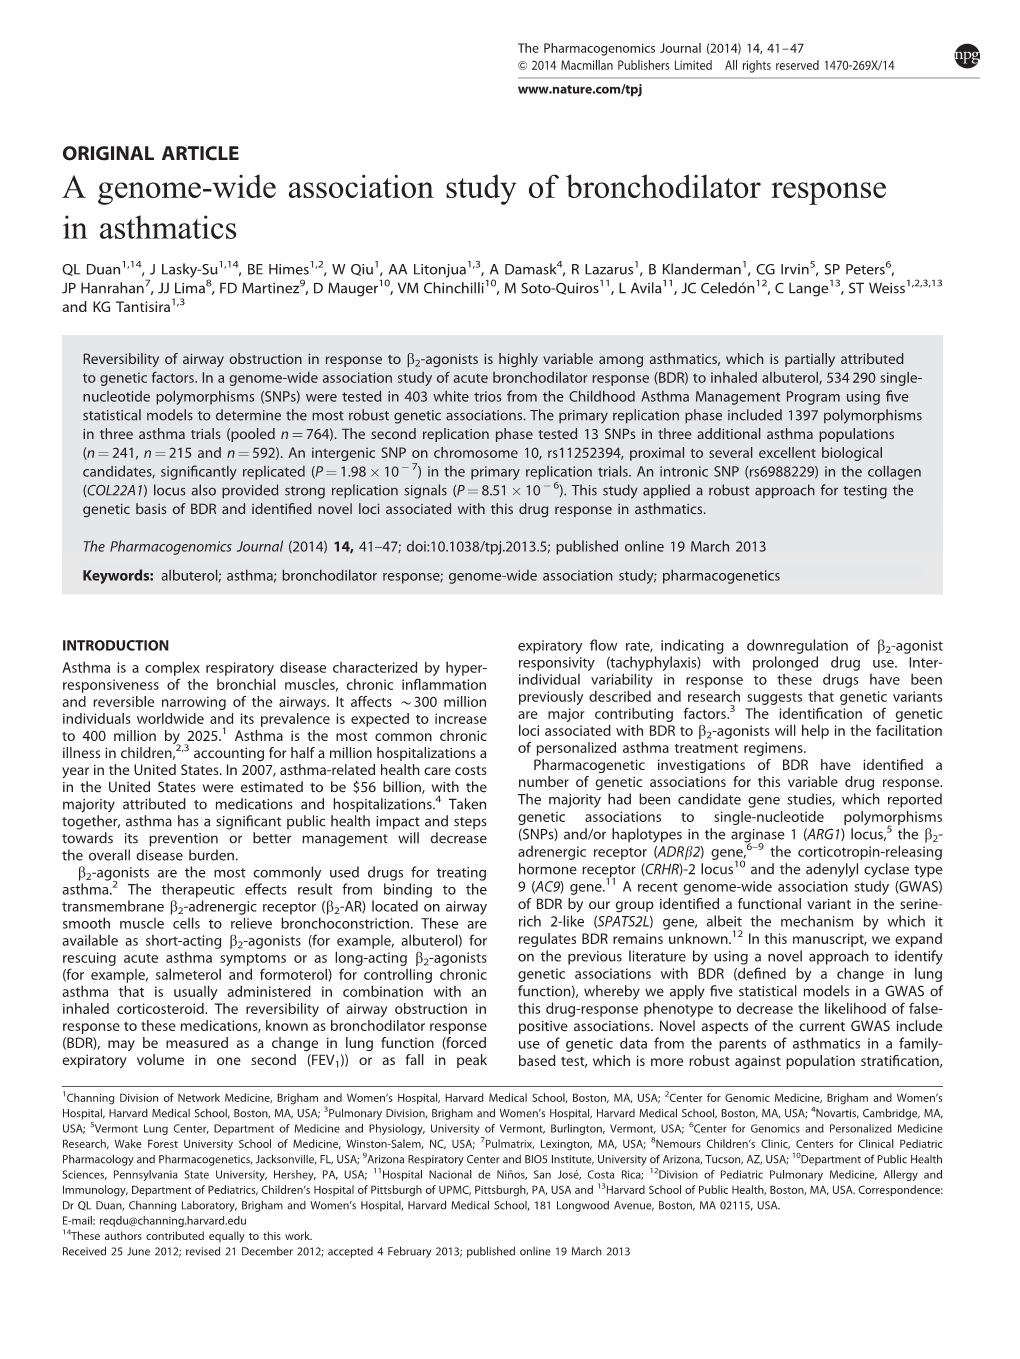 A Genome-Wide Association Study of Bronchodilator Response in Asthmatics